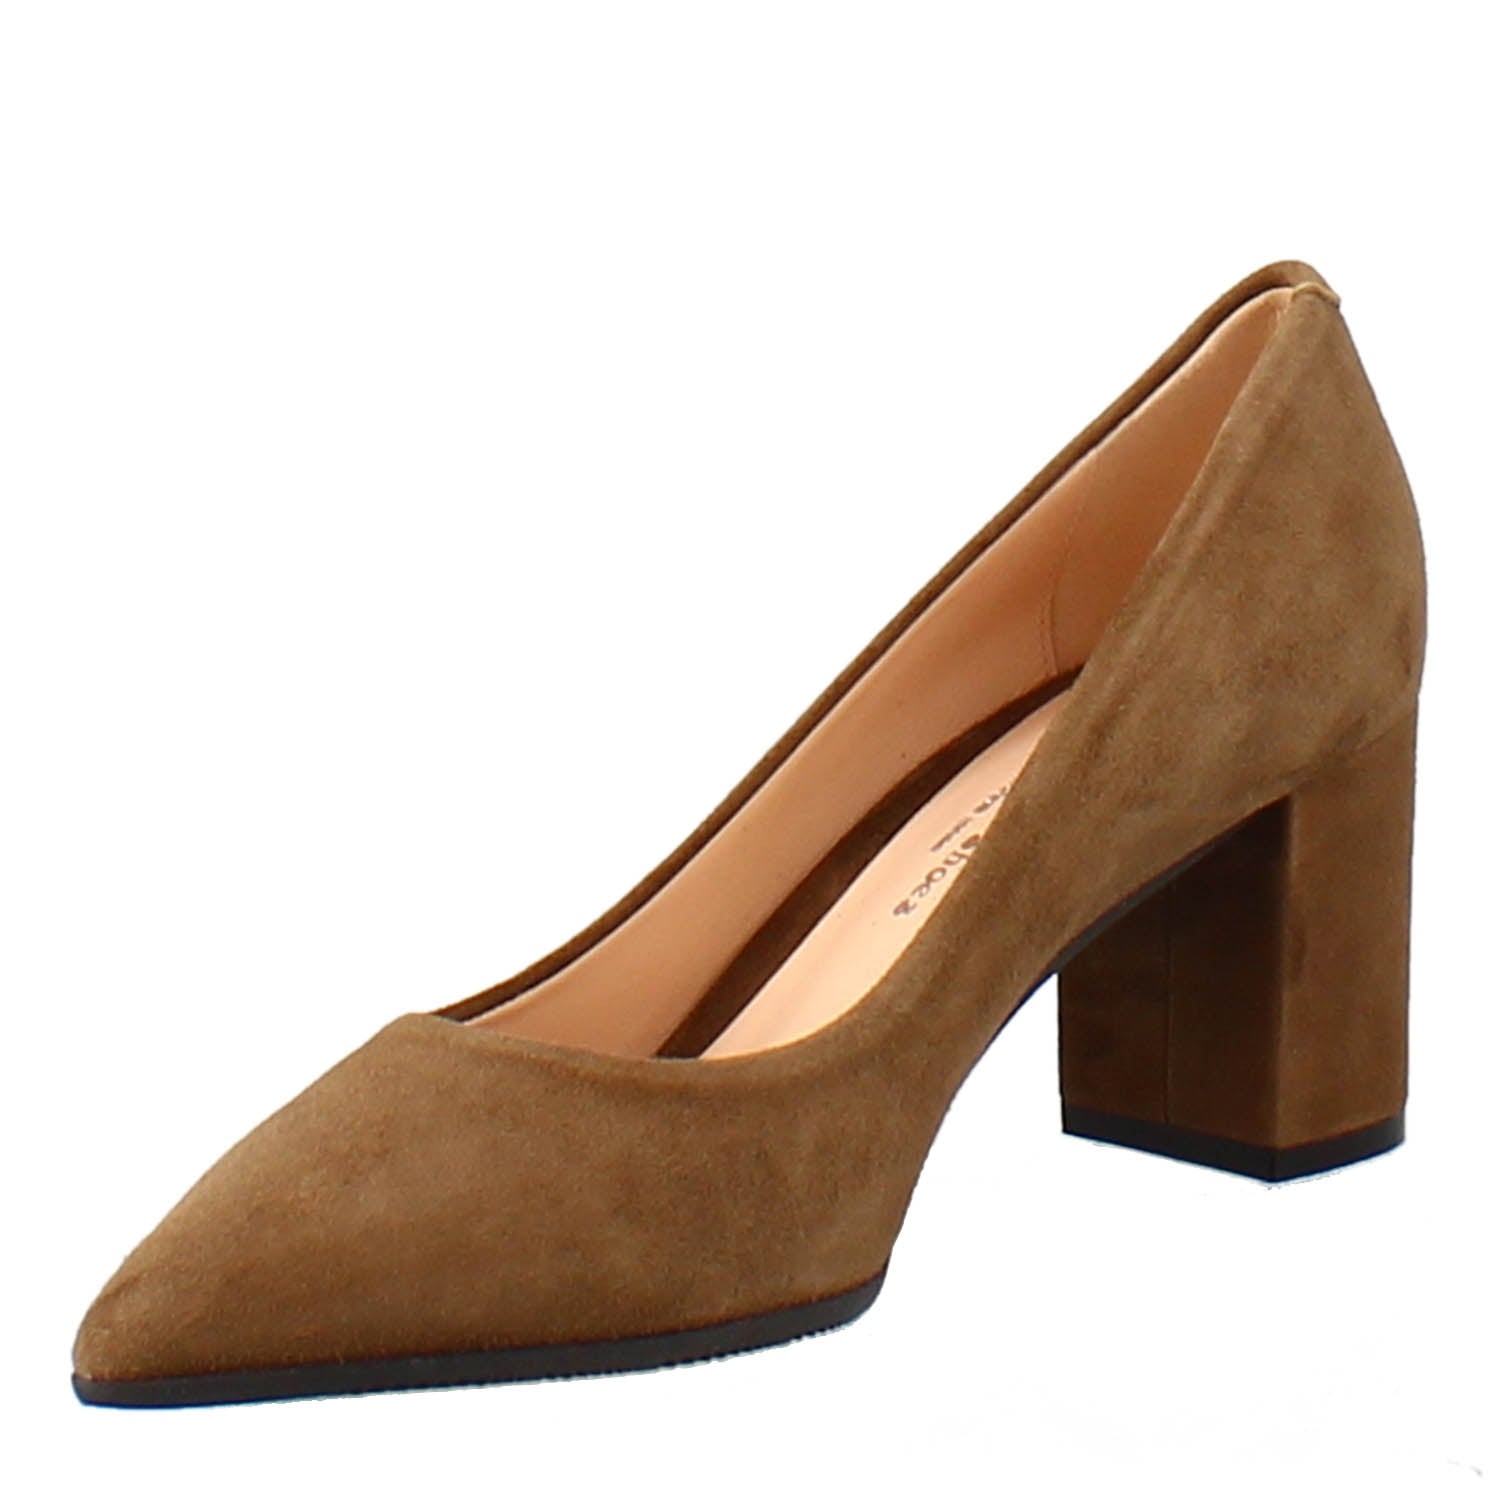 Décolletté in brown suede with high heel 